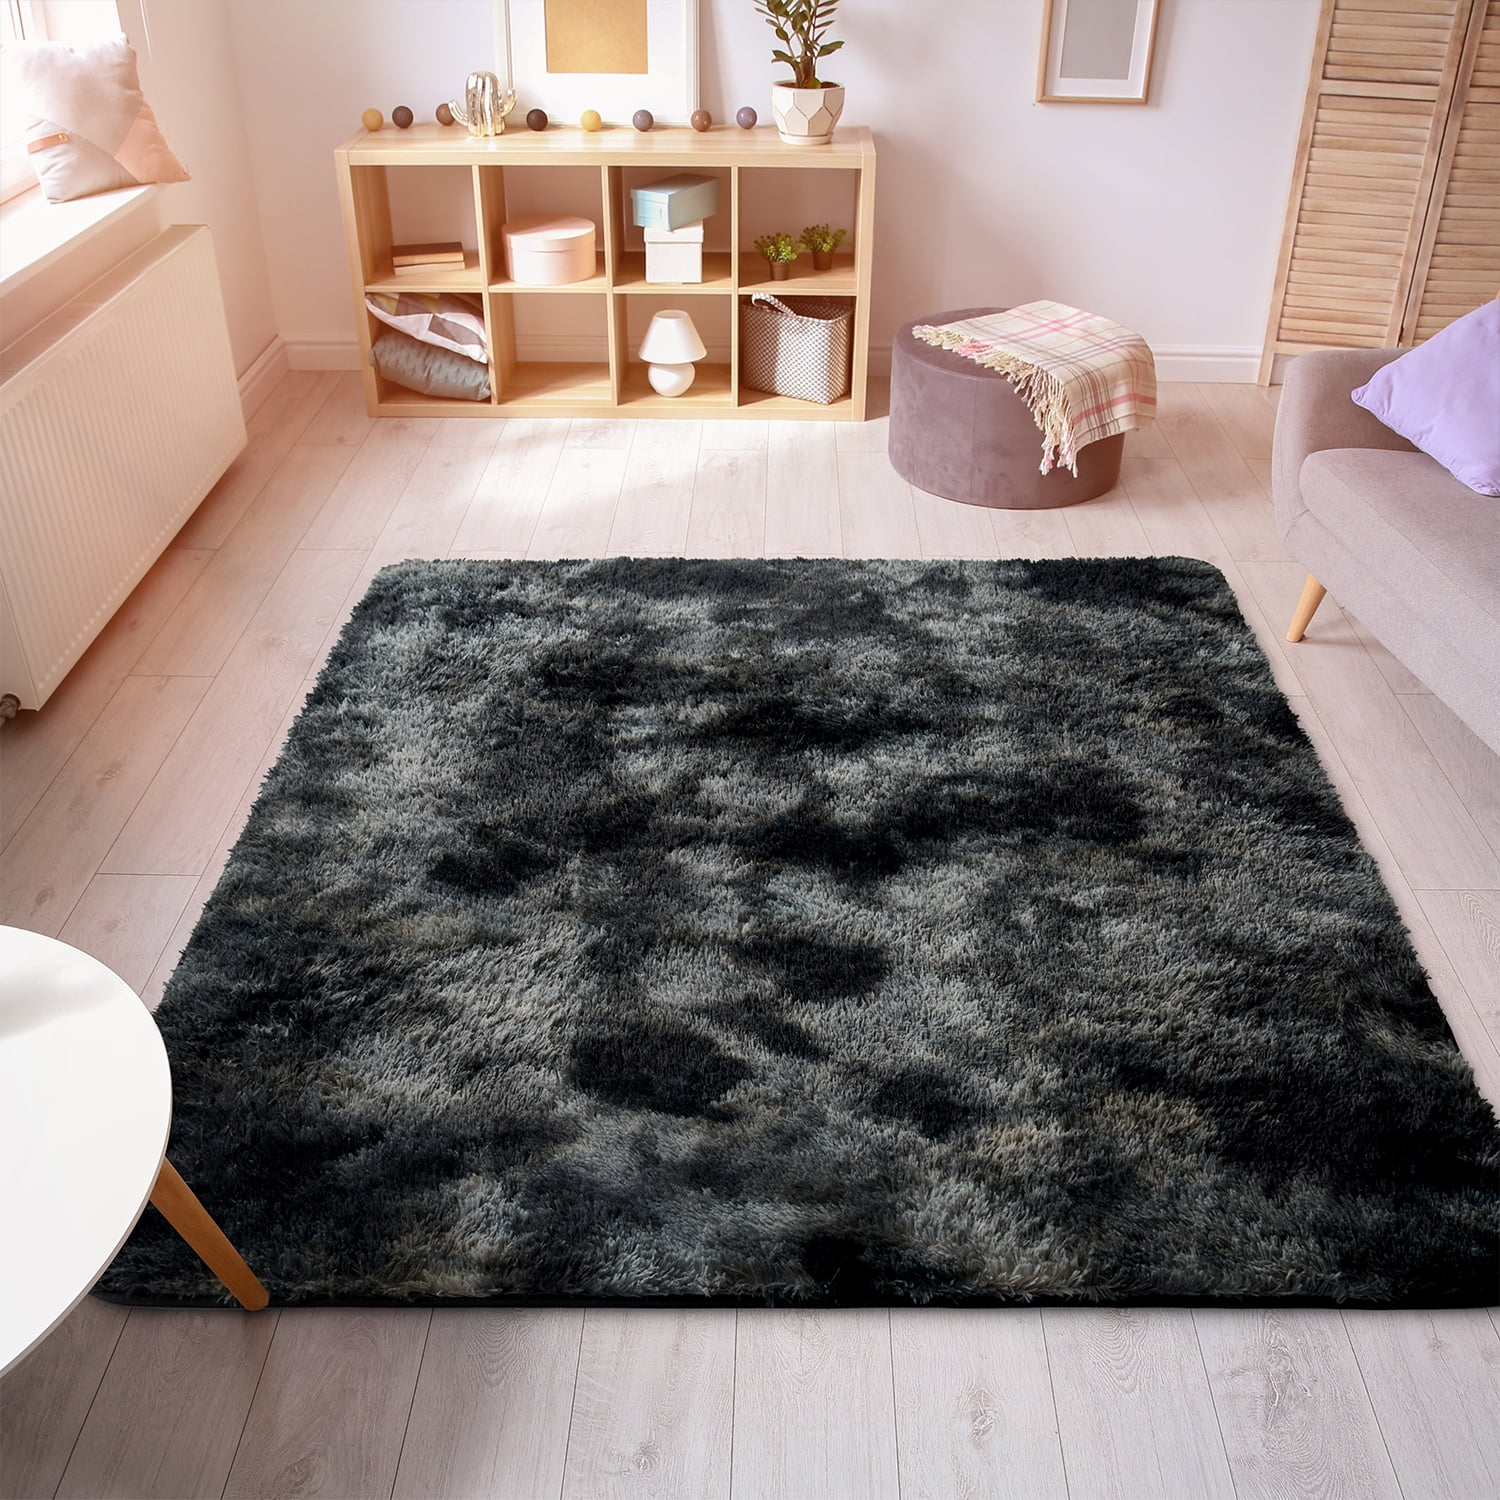 FUR ACCENTS SALE Large Black Shag Area Rug Carpet Rectangle All Sizes 